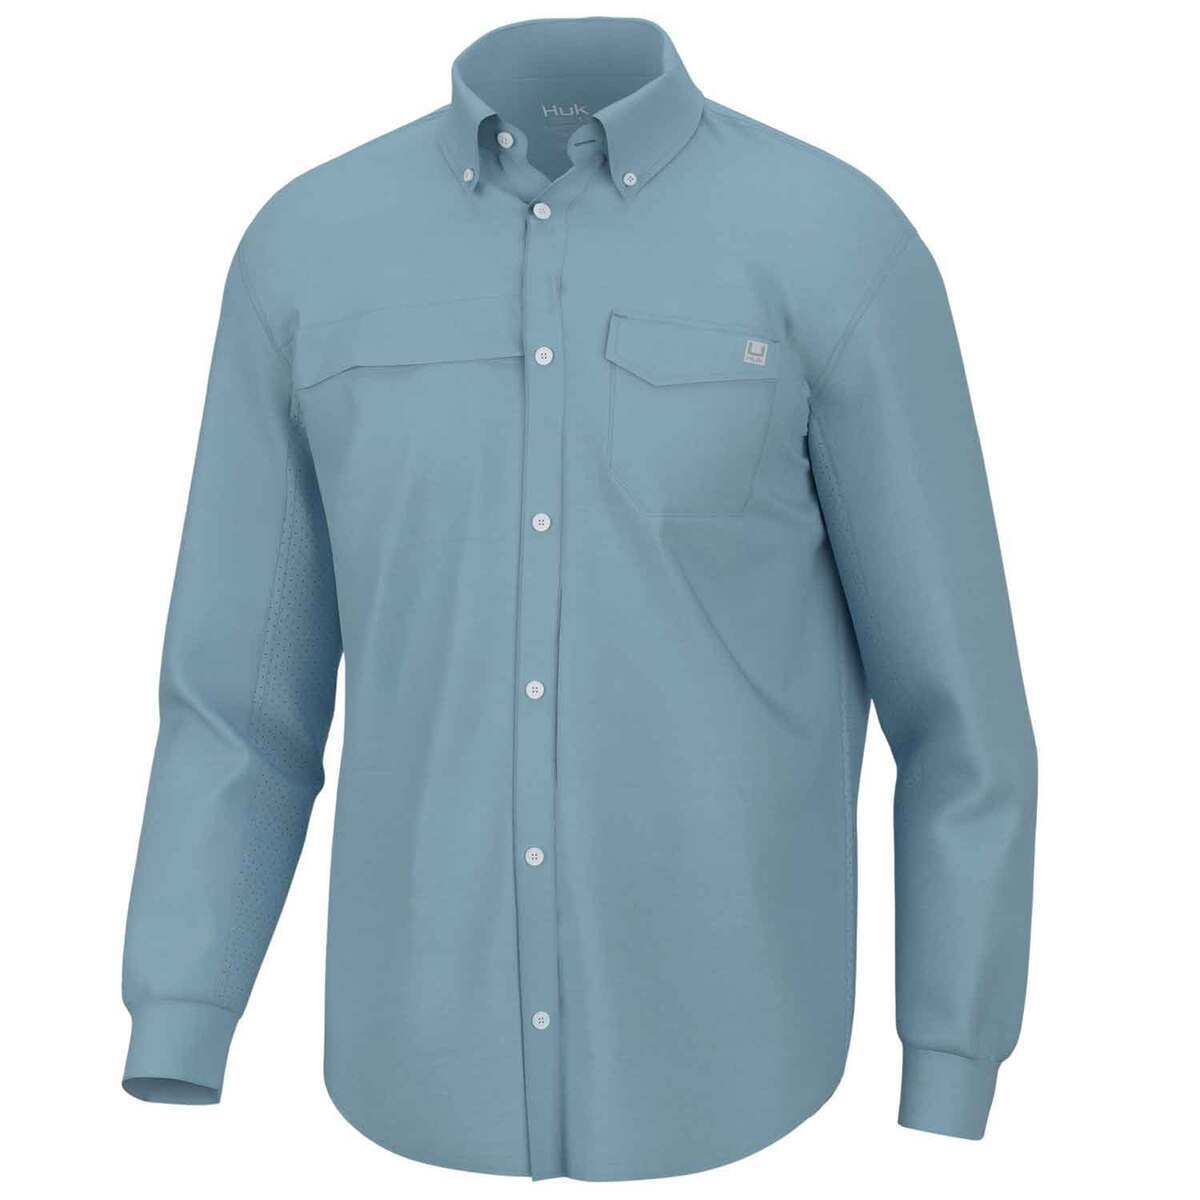 Huk Icon x Pocket Long-Sleeve Shirt - Men's Crystal Blue M